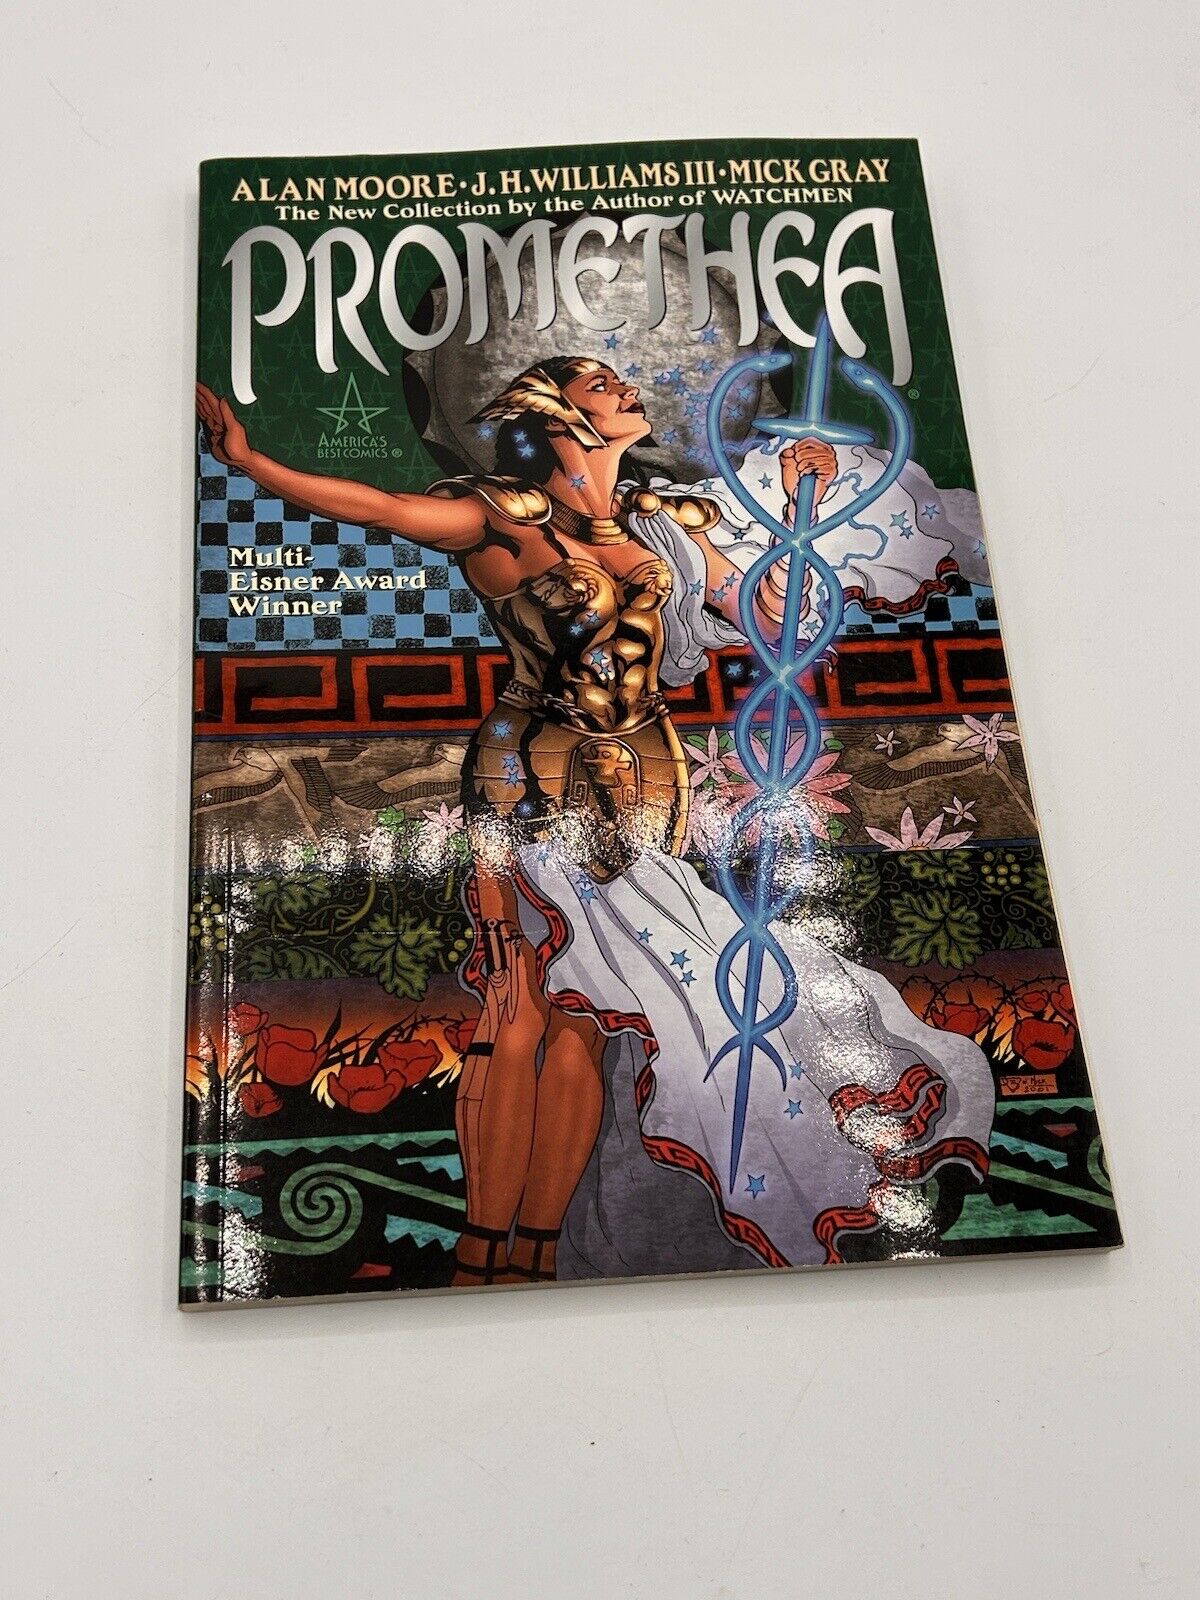 Promethea #1 (DC Comics, 2000 August 2001) Allan Moore J.H. Williams III